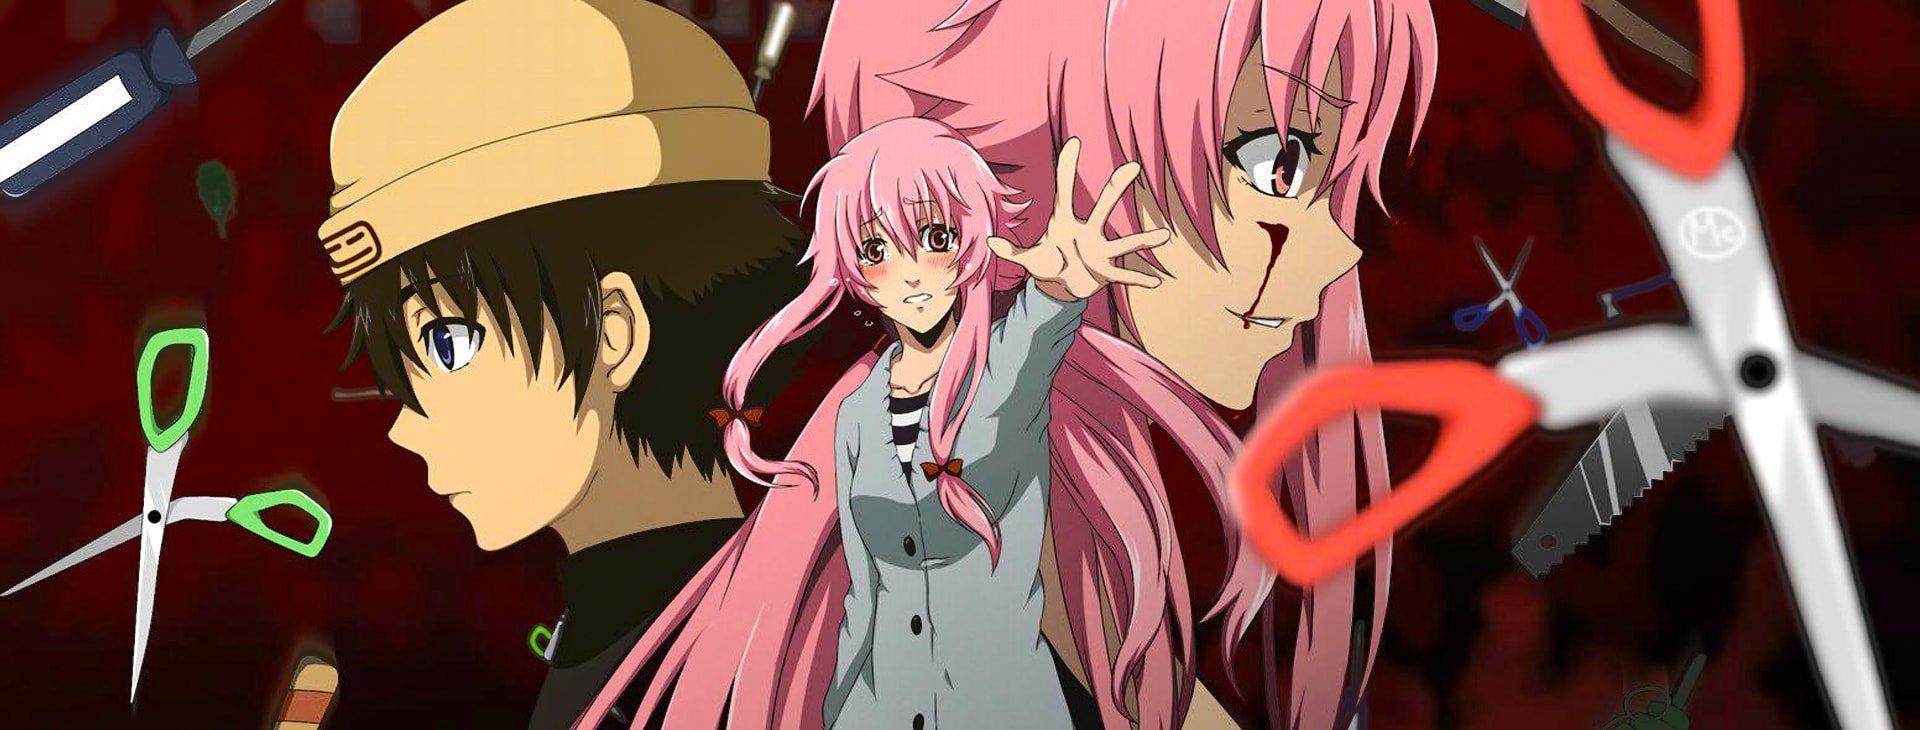 Sugoi-desu!: Sinopse e Opinião de Animes: Mirai Nikki (26 episódios)